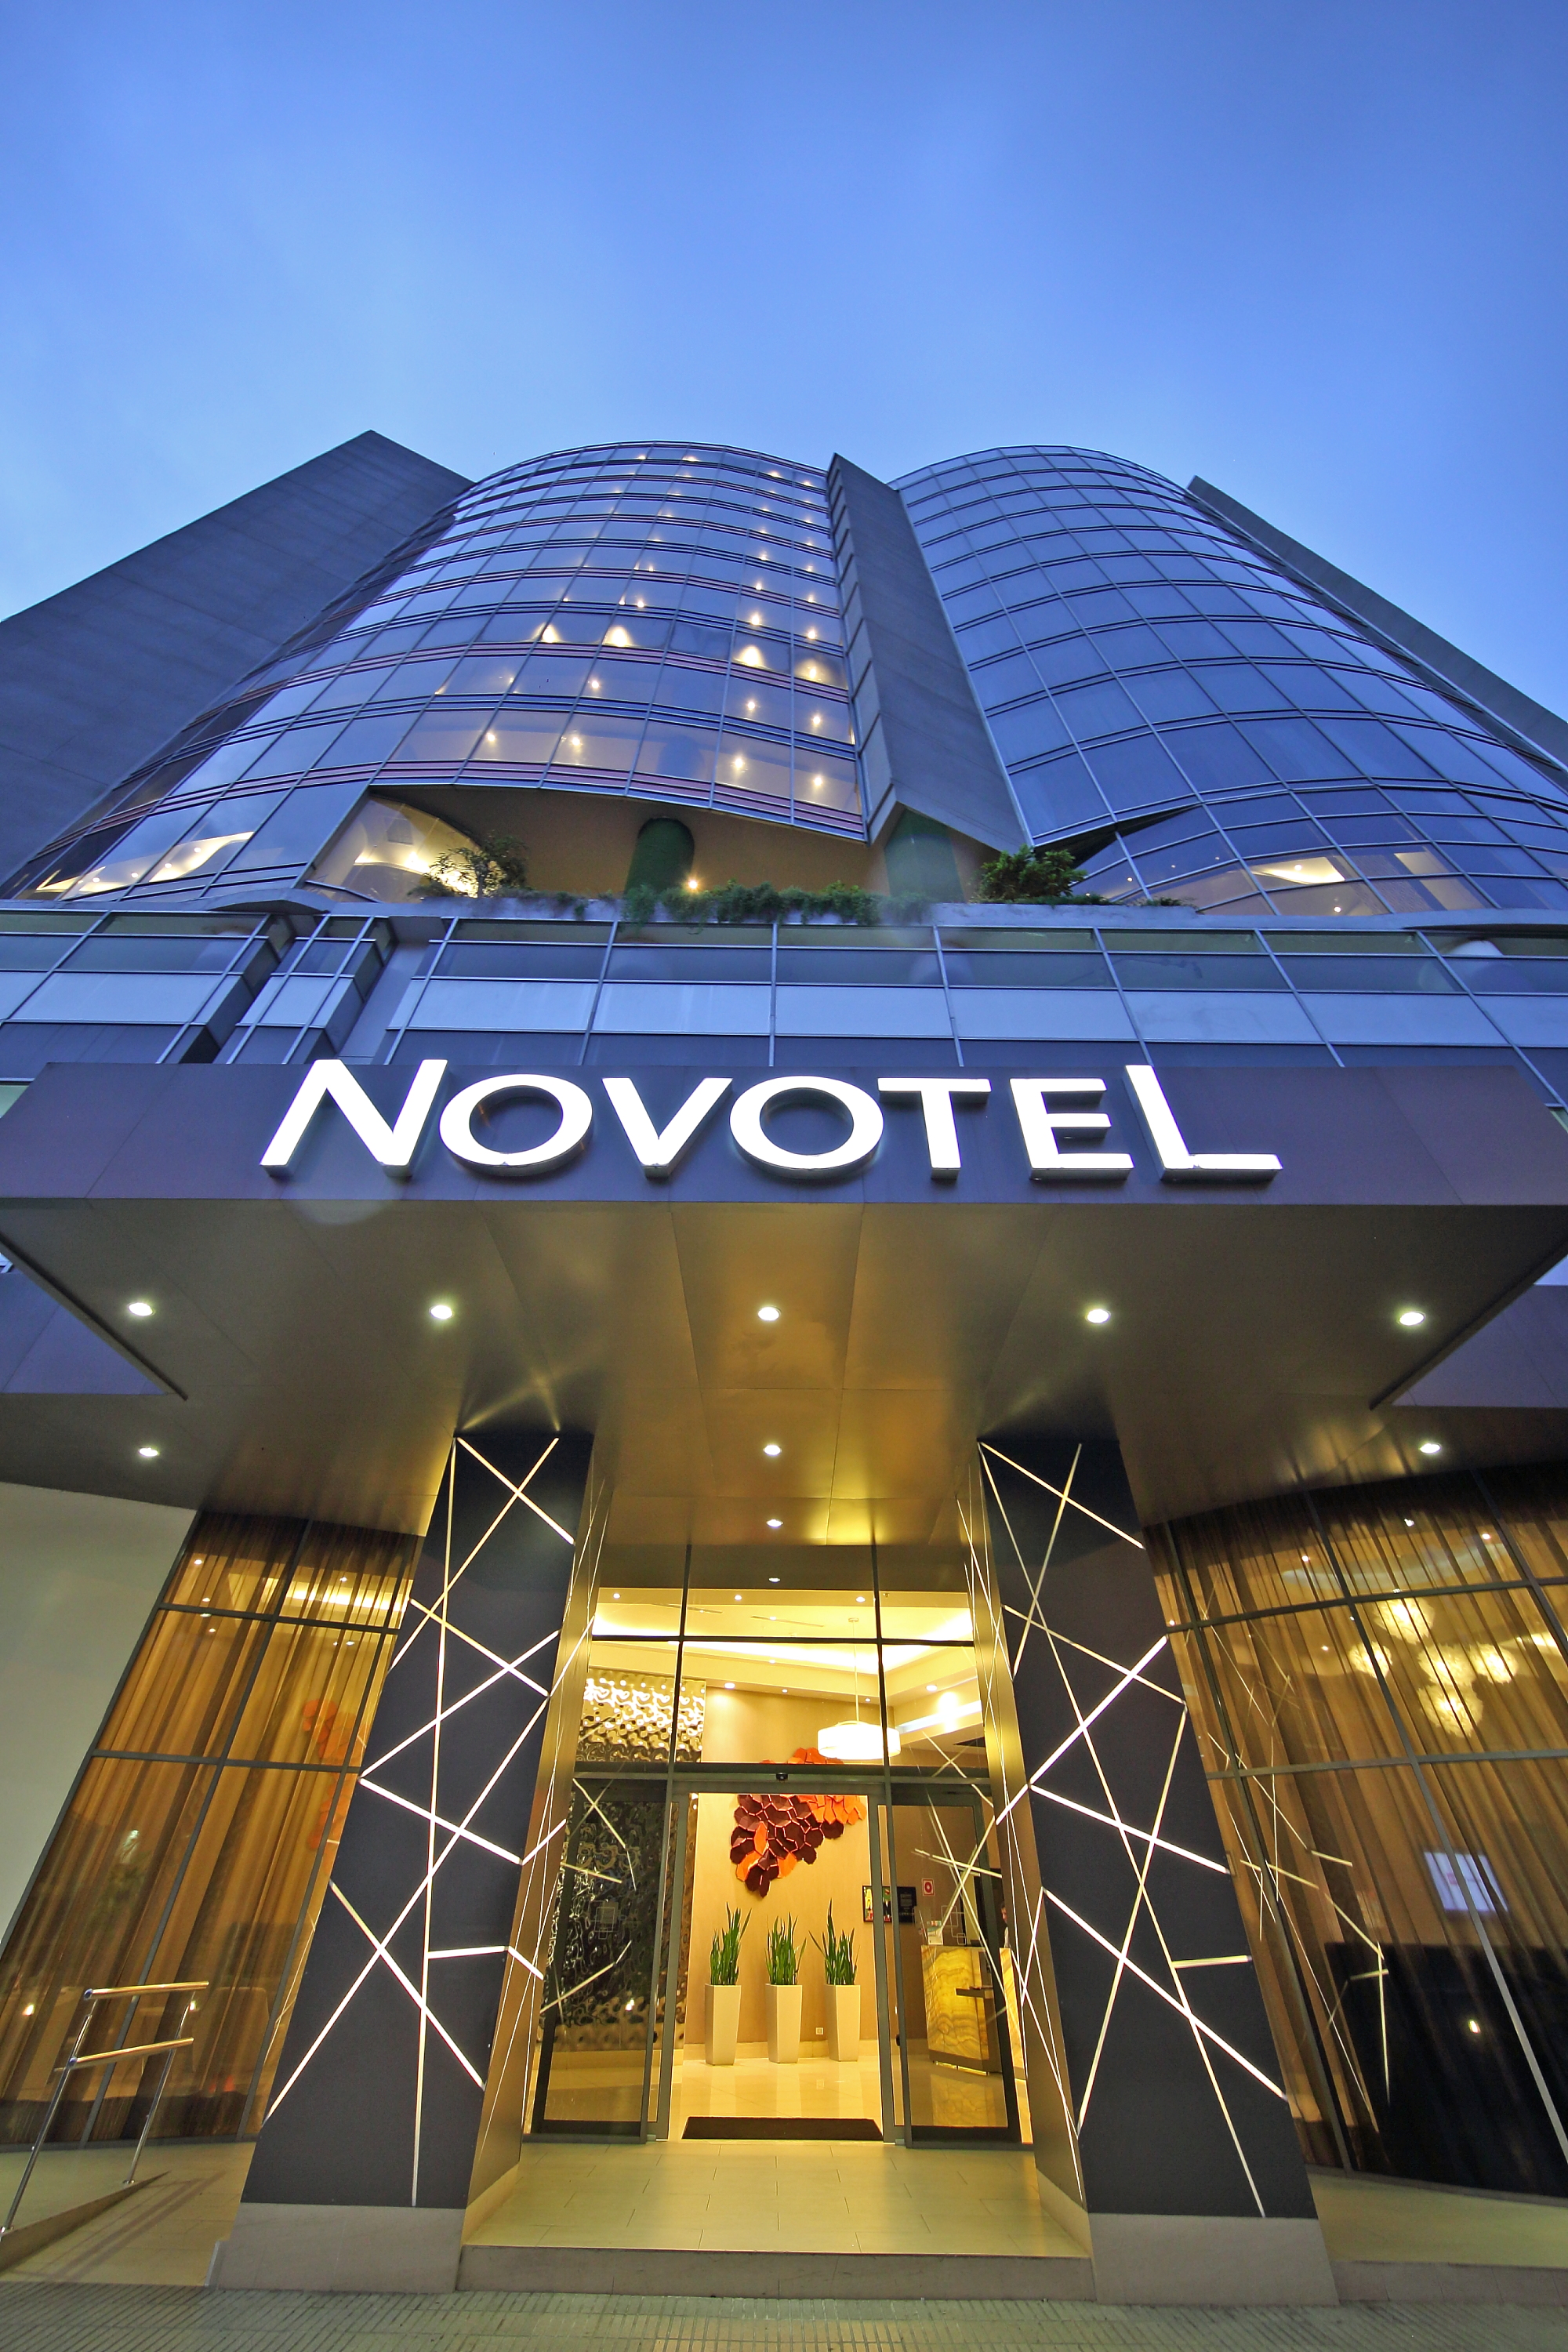 Novotel Panama City image